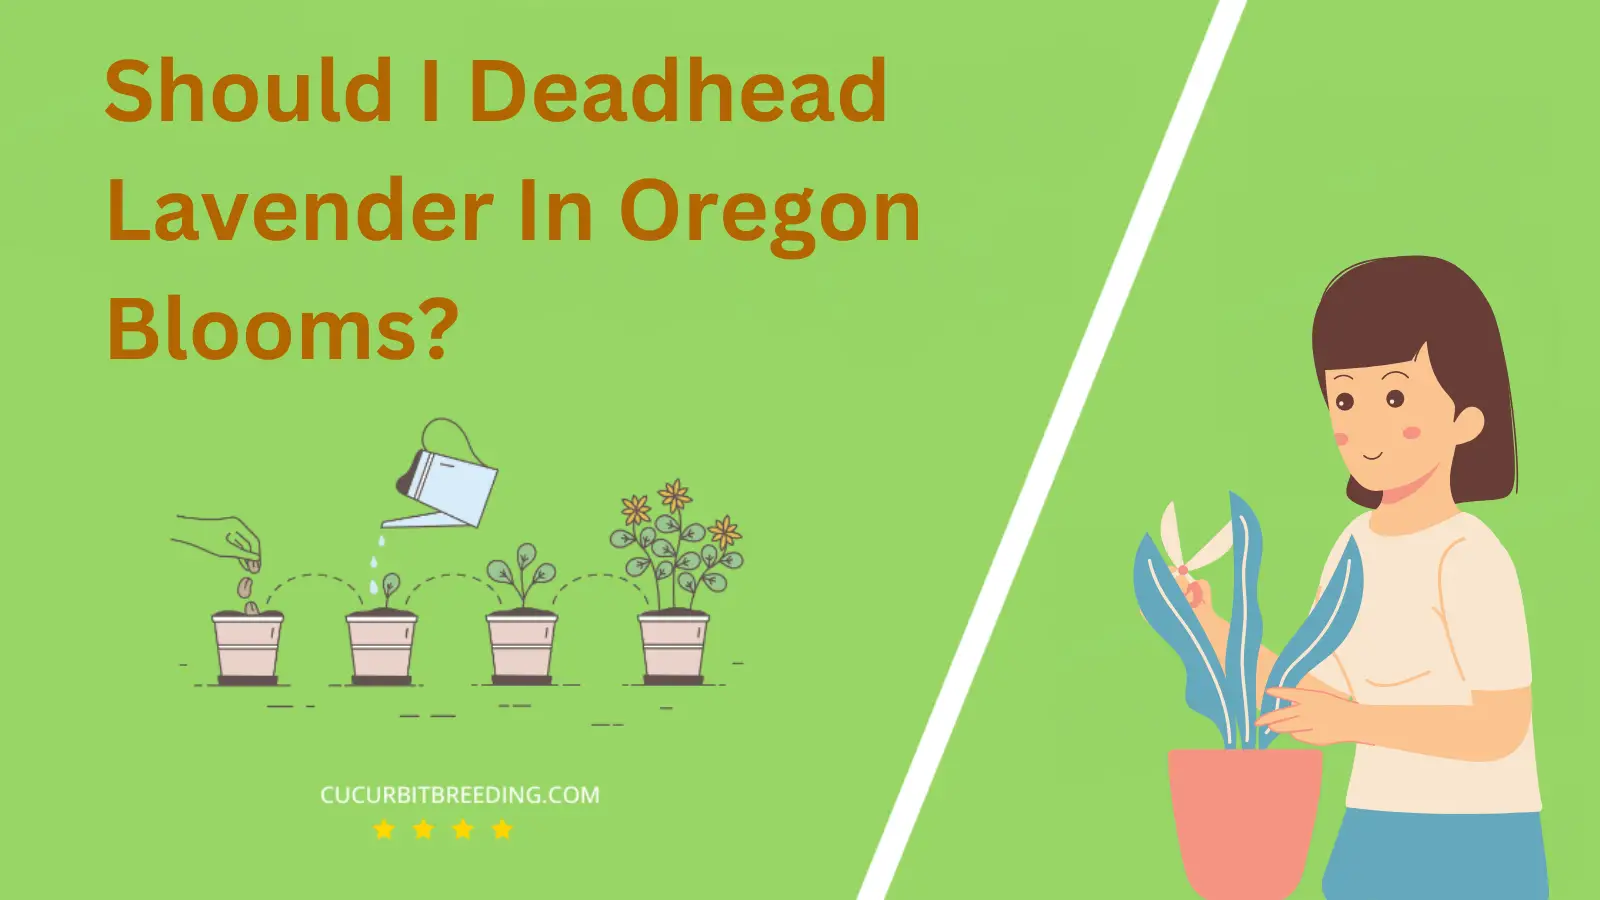 Should I Deadhead Lavender In Oregon Blooms?